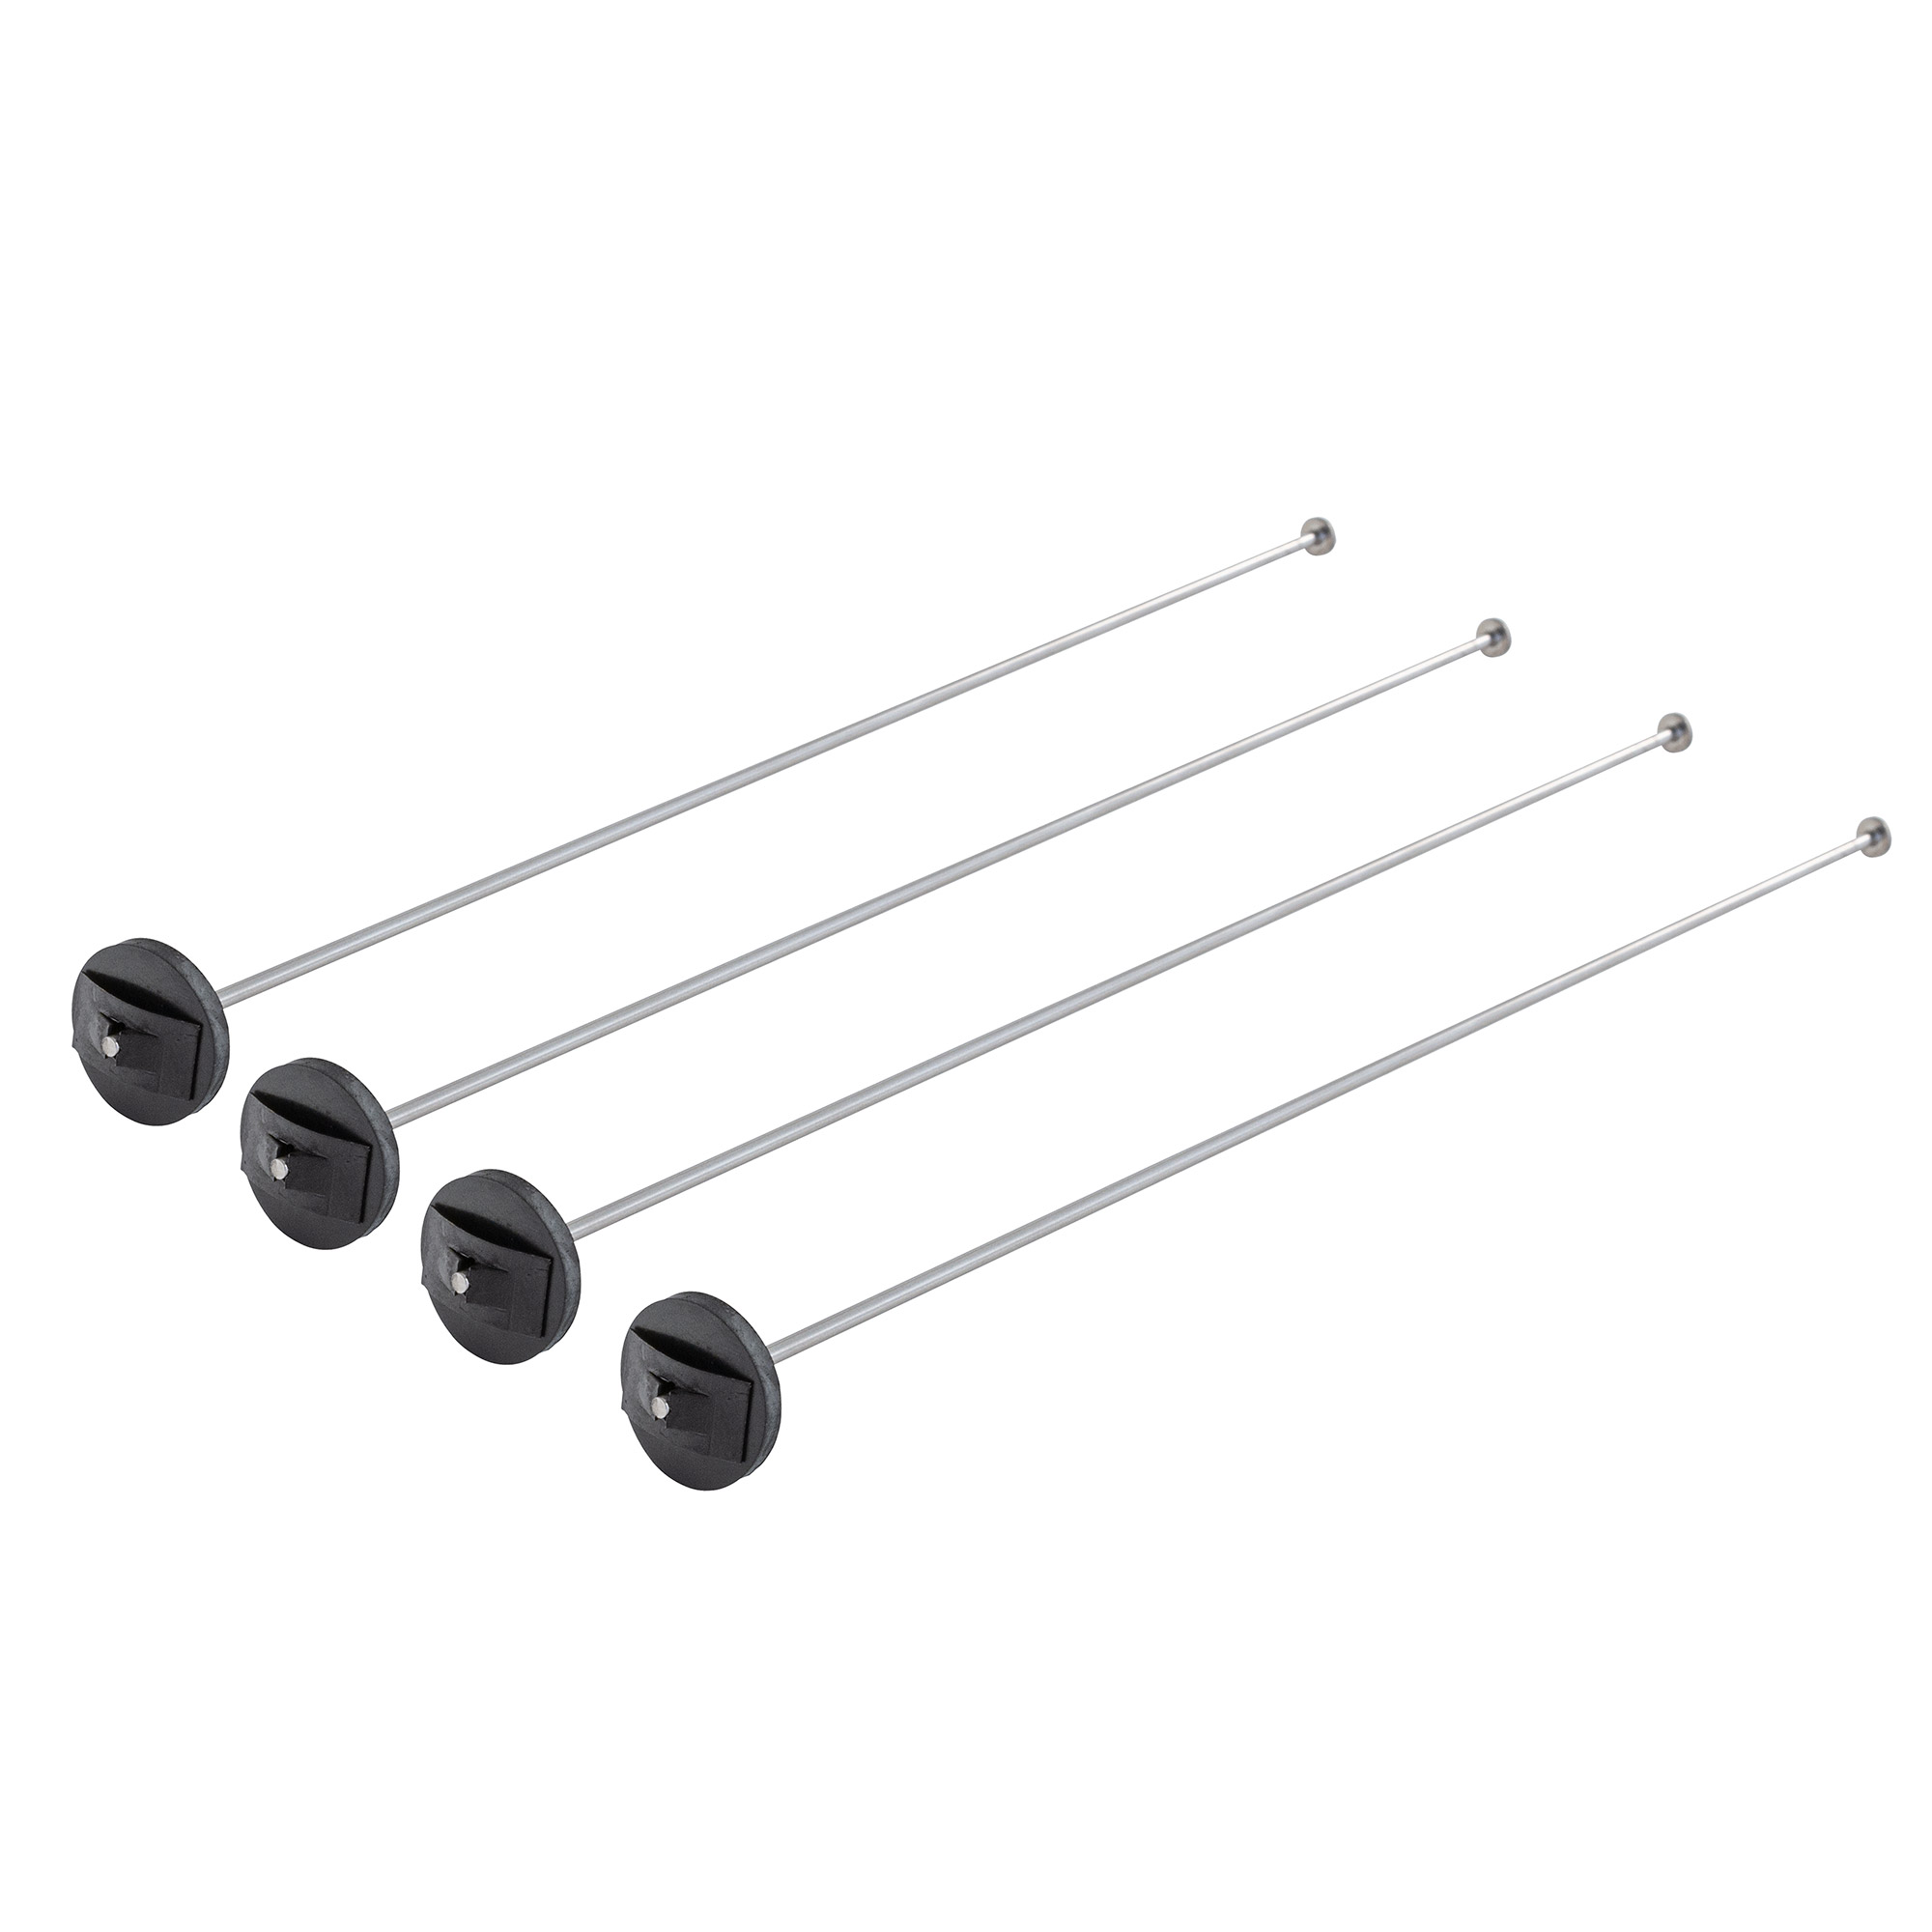 Spal High Performance Fan Mounting Pin Kit - Set Of 4 - 2mm x 180mm ...